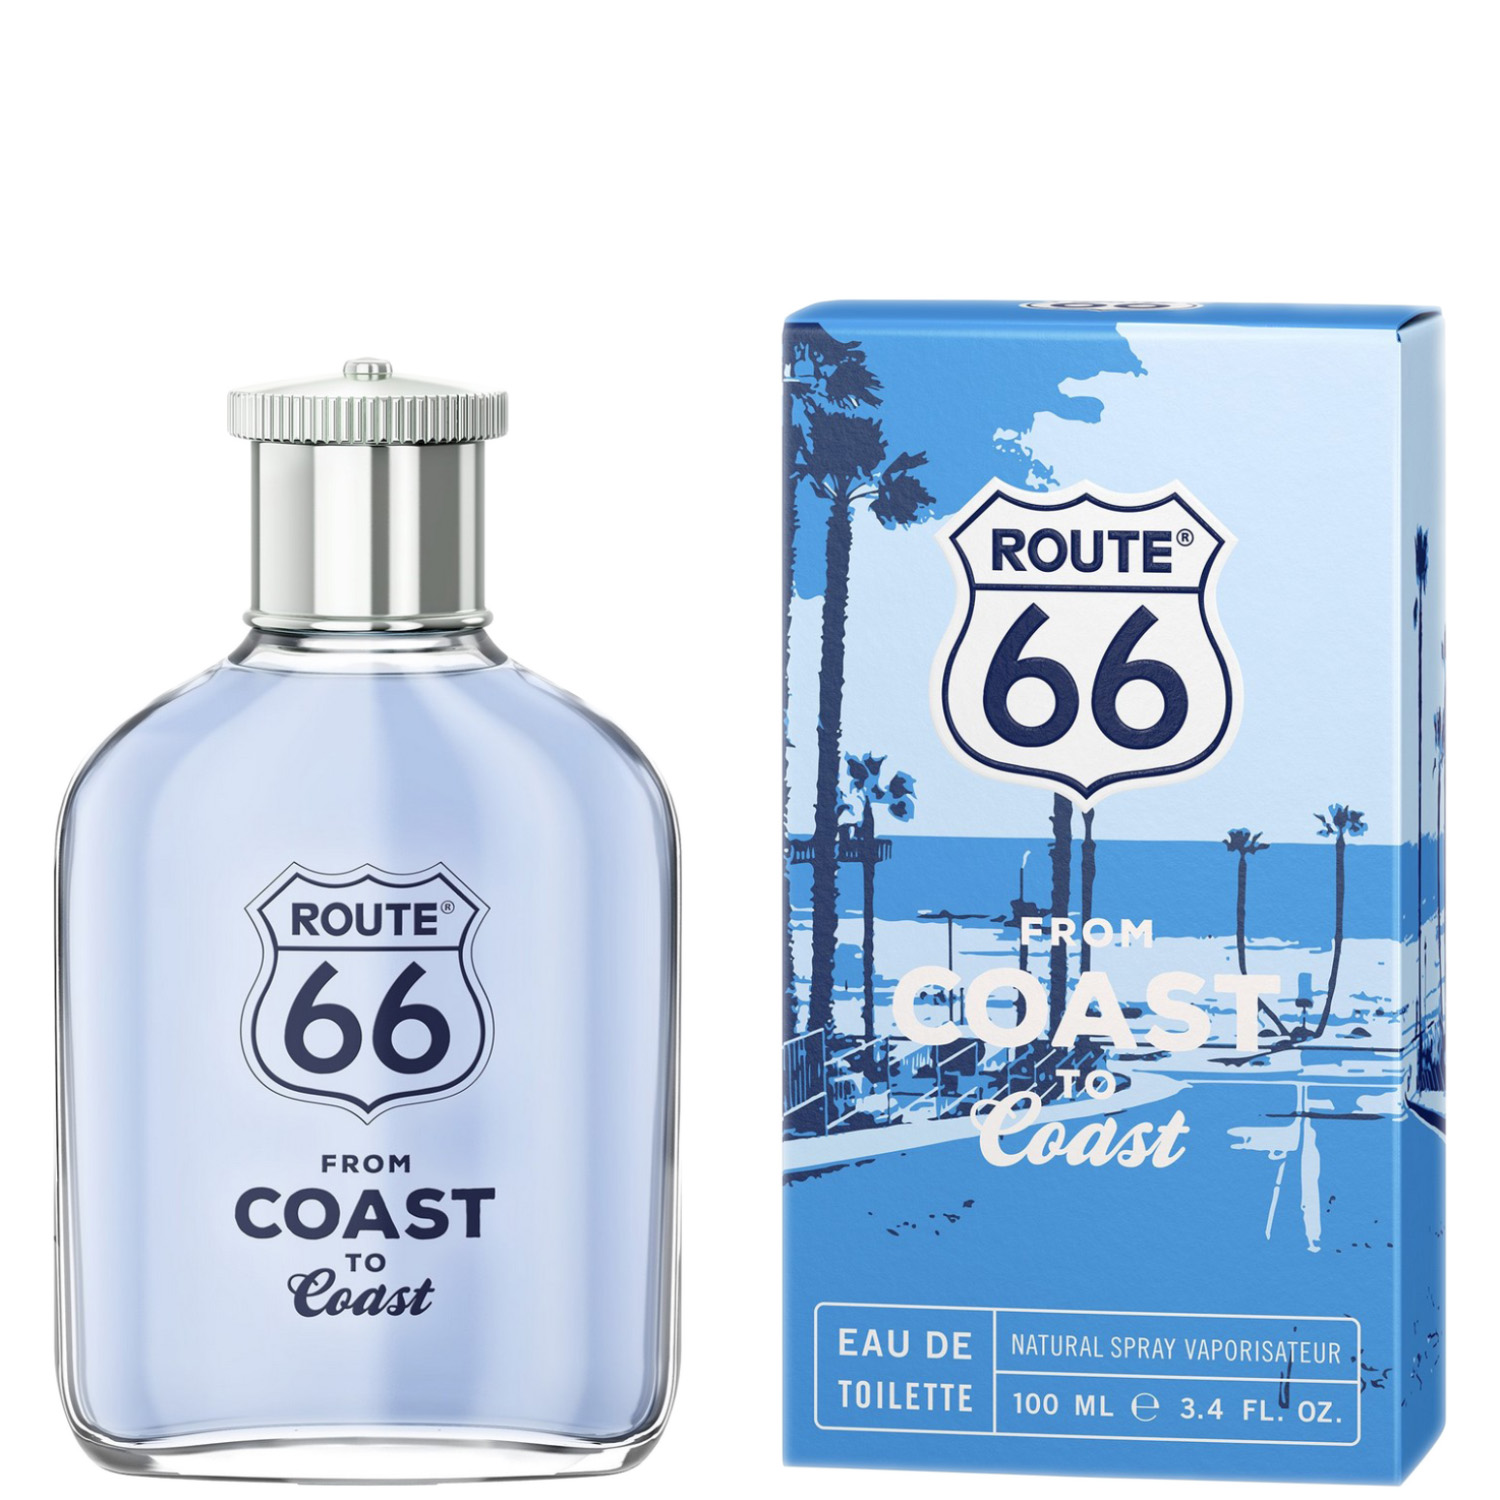 Route 66 From Coast to Coast Eau de Toilette 100ml